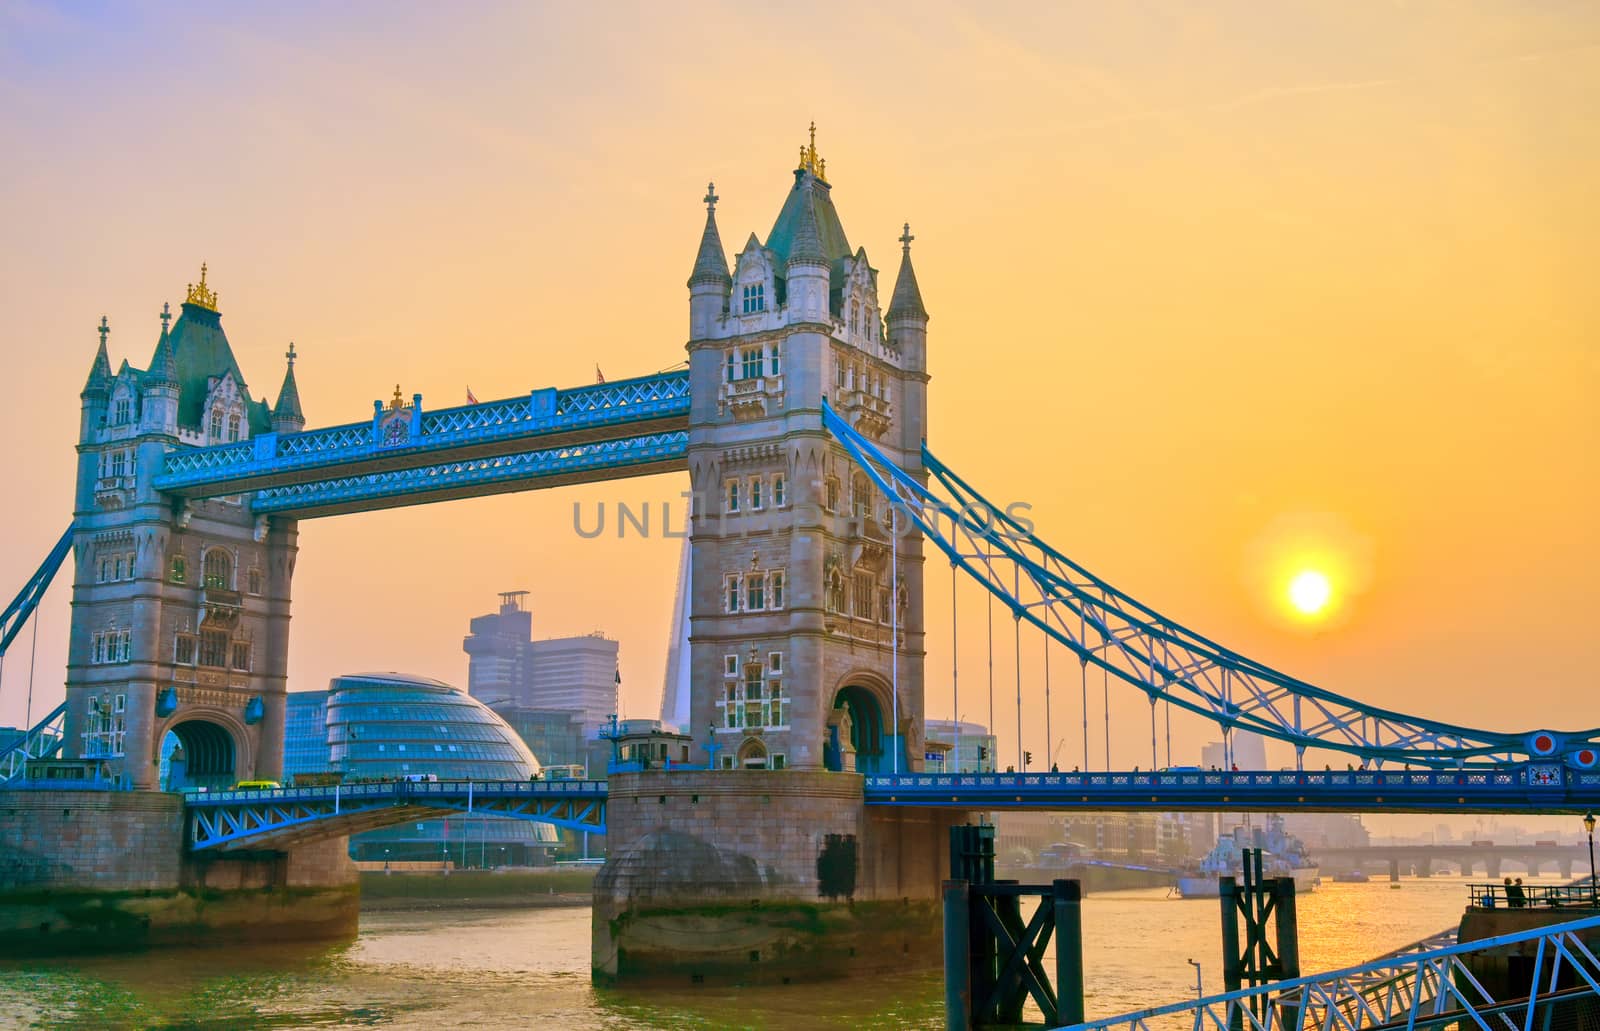 Tower Bridge across the River Thames in London, UK by jbyard22